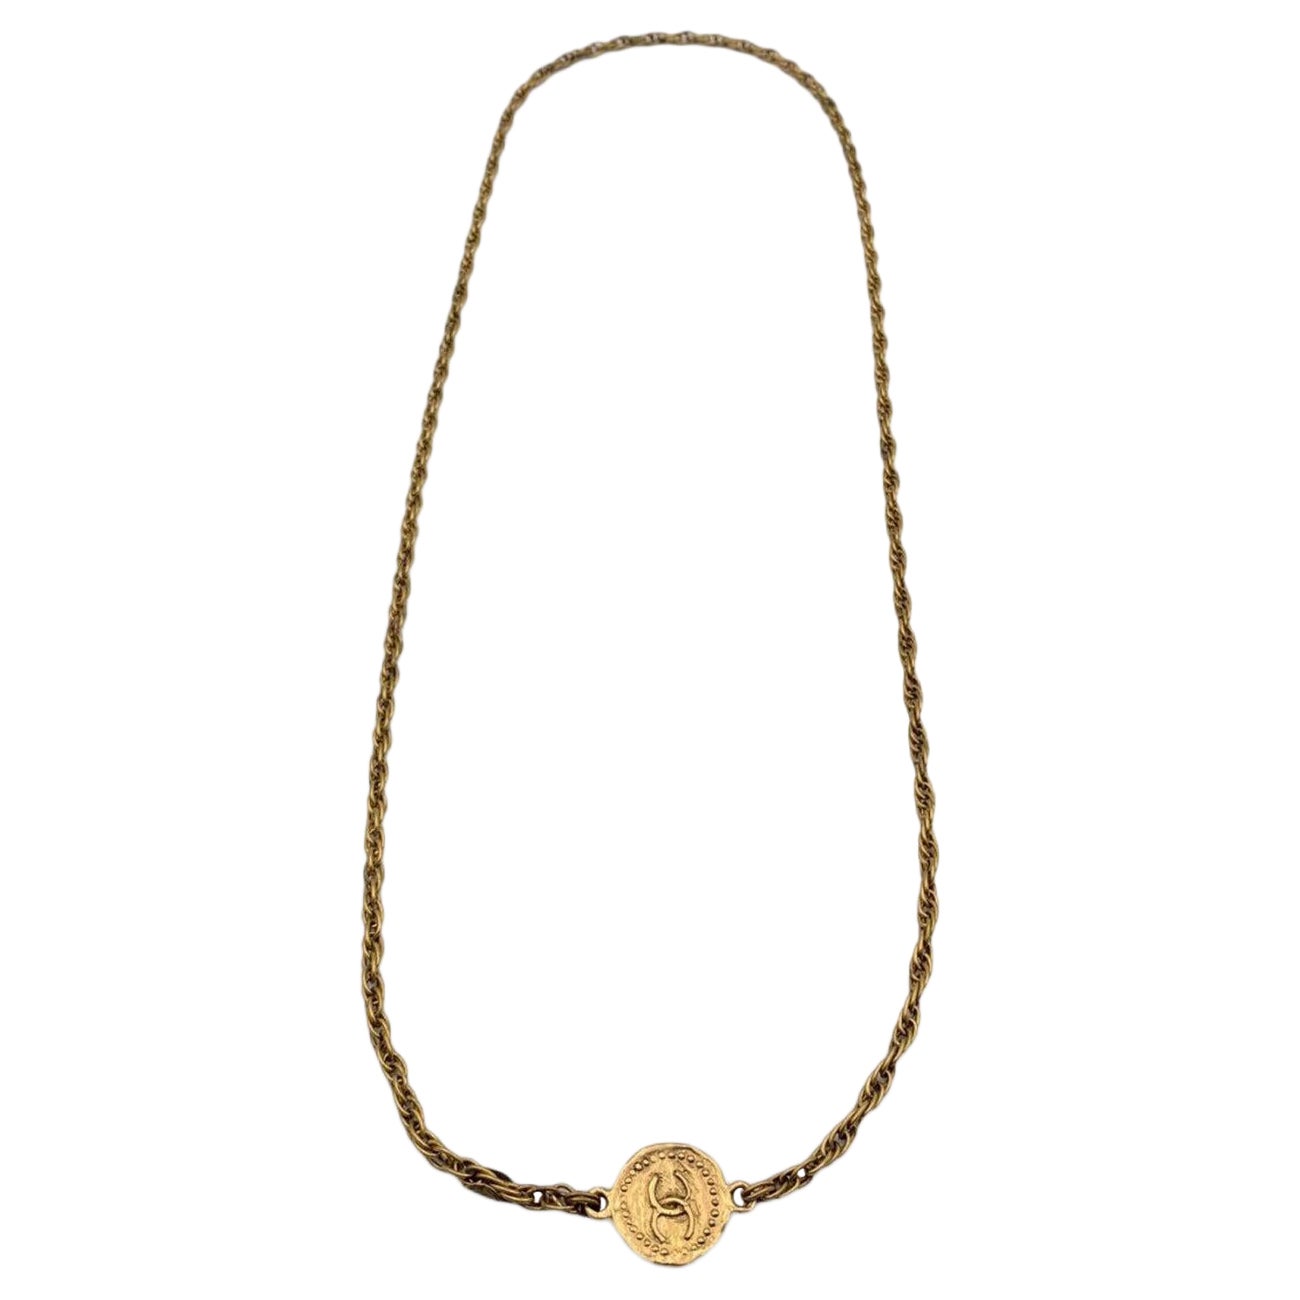 Chanel Vintage 1970er Jahre Gold Metall Lange Medaillon Münze Halskette mit Medaillon